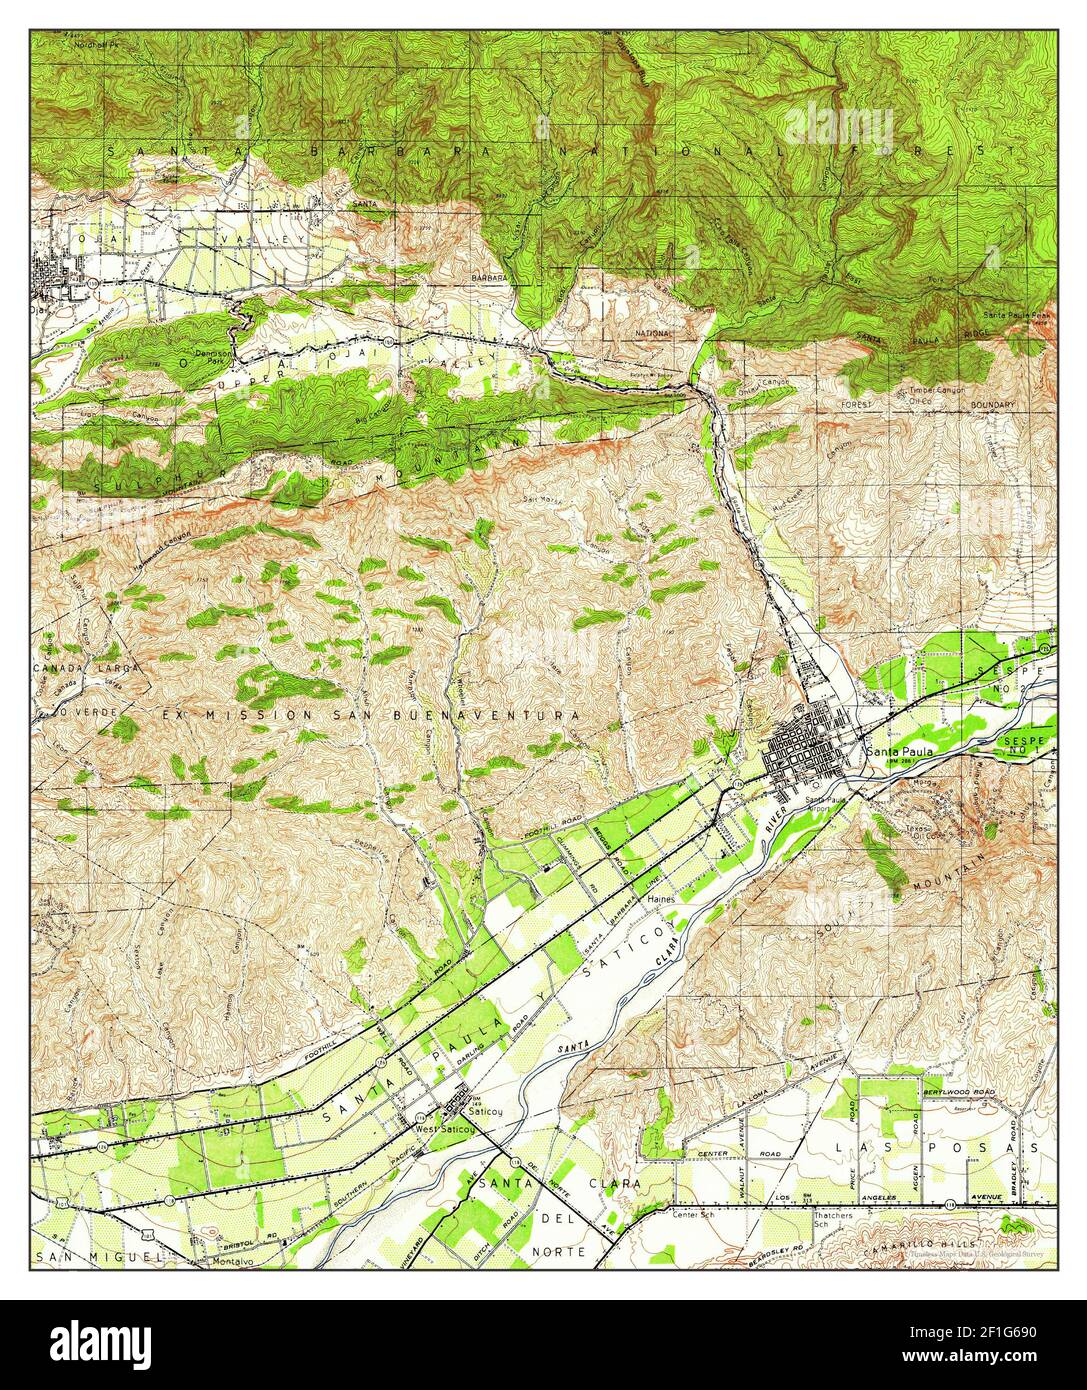 Santa Paula, California, map 1947, 1:62500, United States of America by Timeless Maps, data U.S. Geological Survey Stock Photo